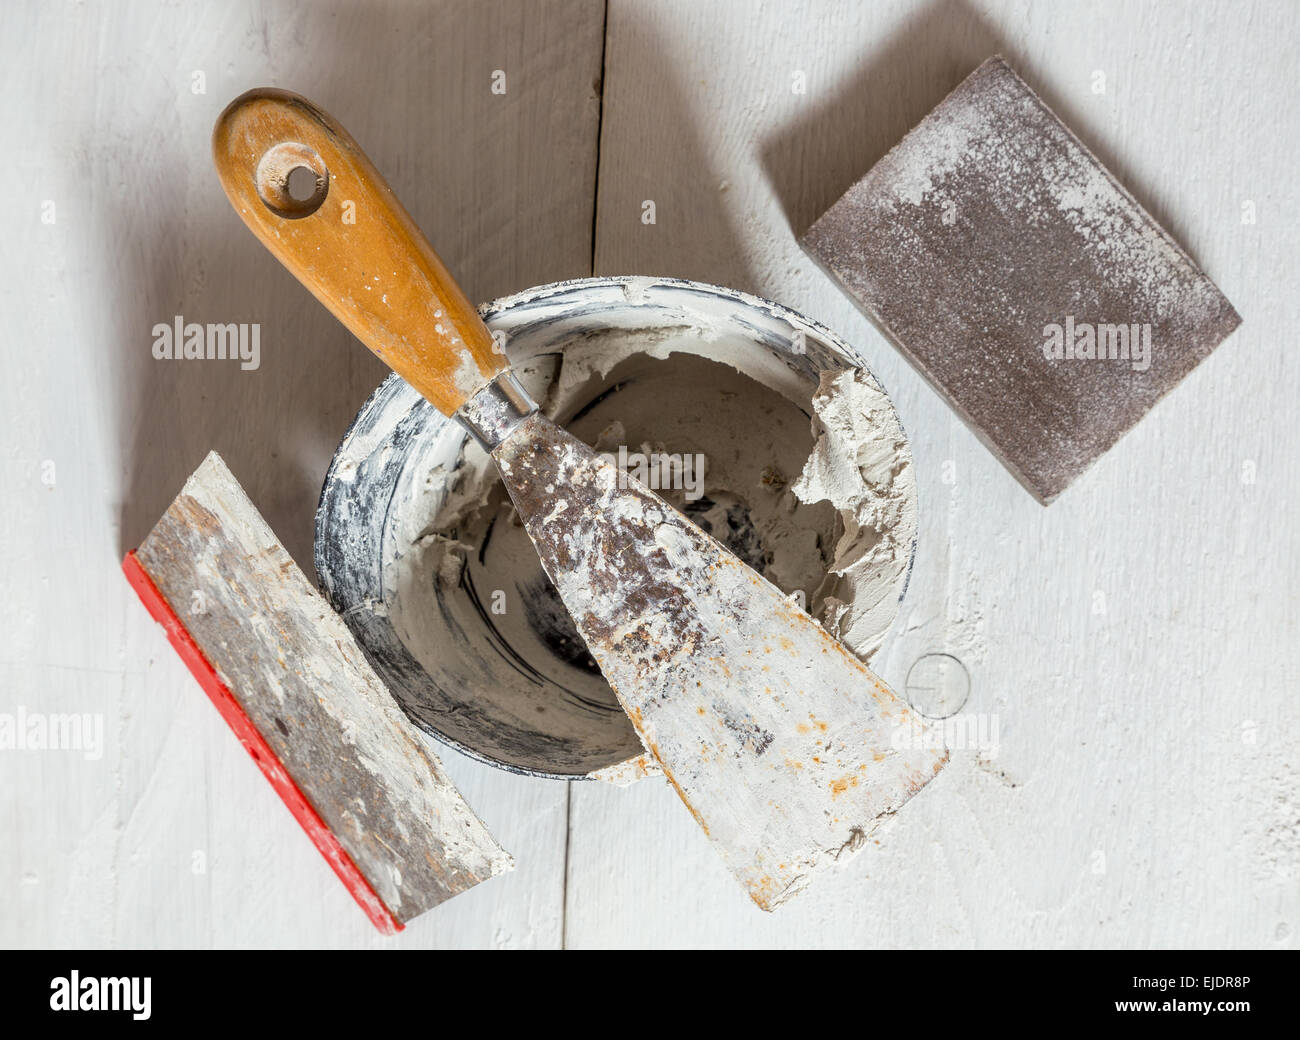 Spatula mixing tub and sanding block. Stock Photo